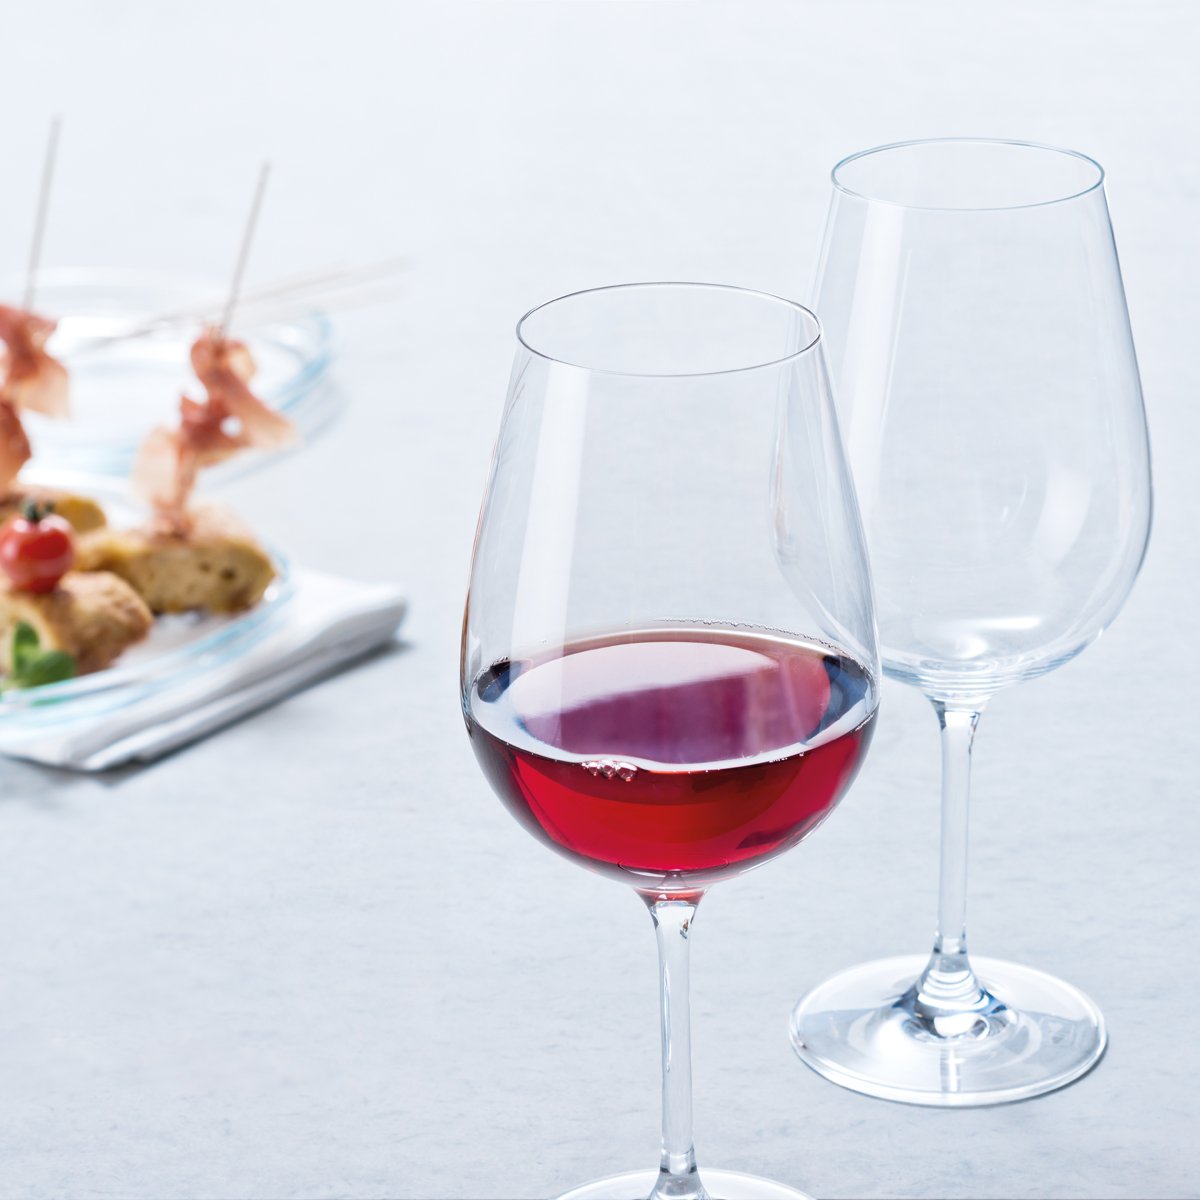 leonardo-tivoli-red-wine-glass-durable-teqton-glass-large-700ml-set-of-6